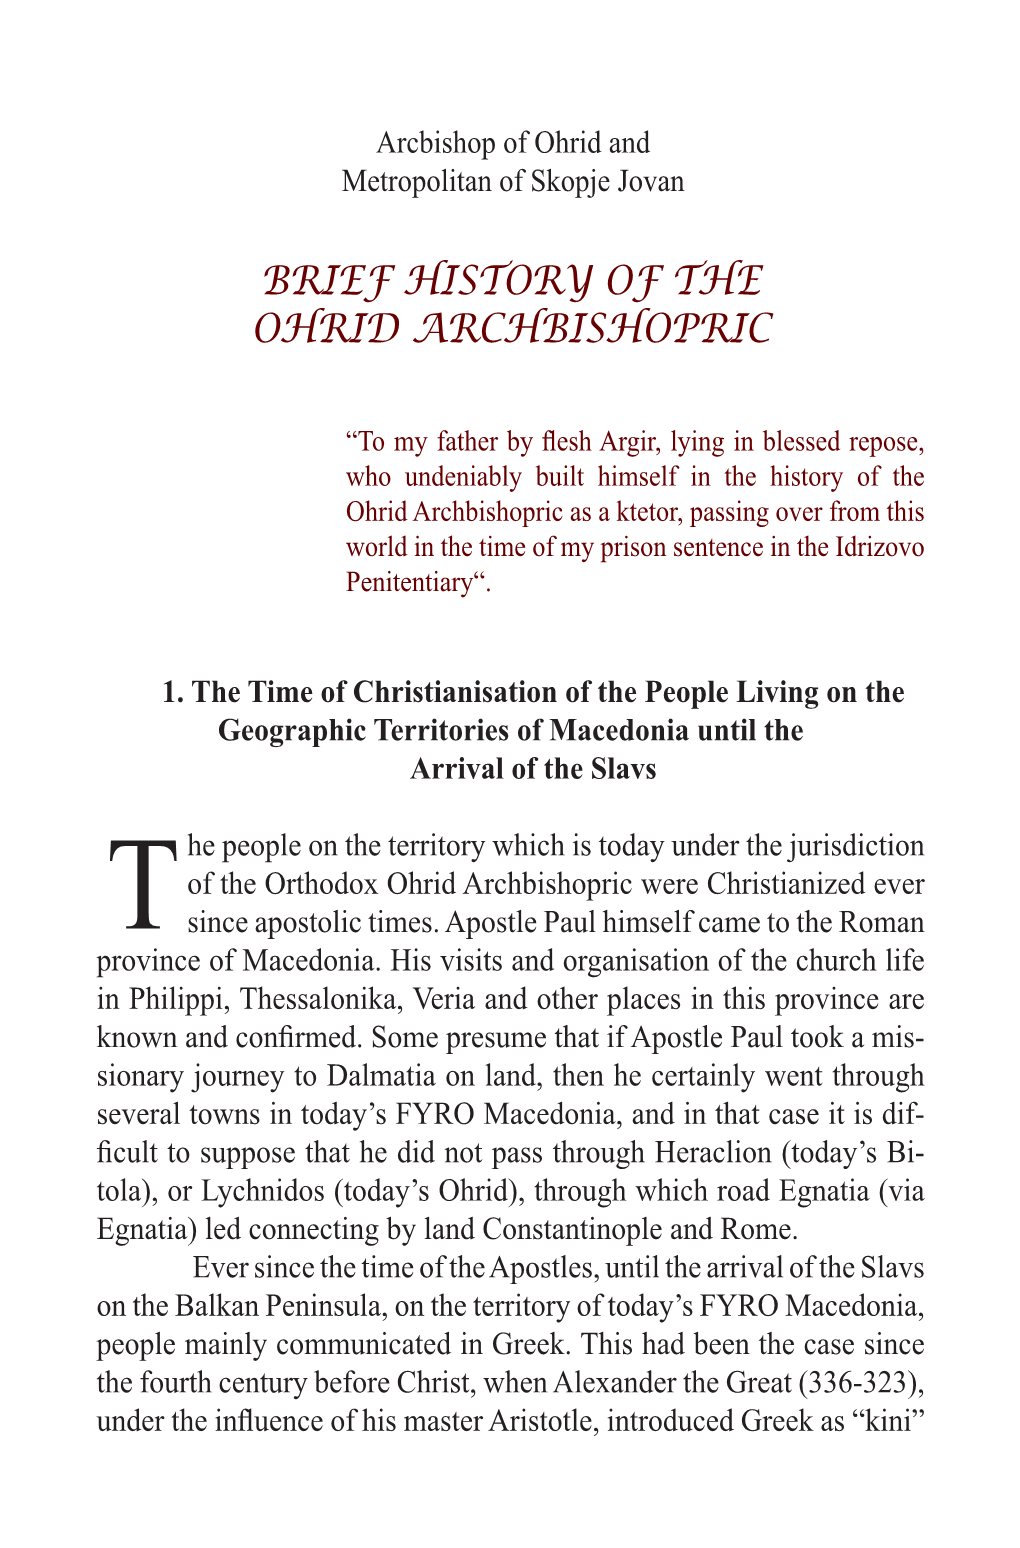 Brief History of the Ohrid Archbishopric